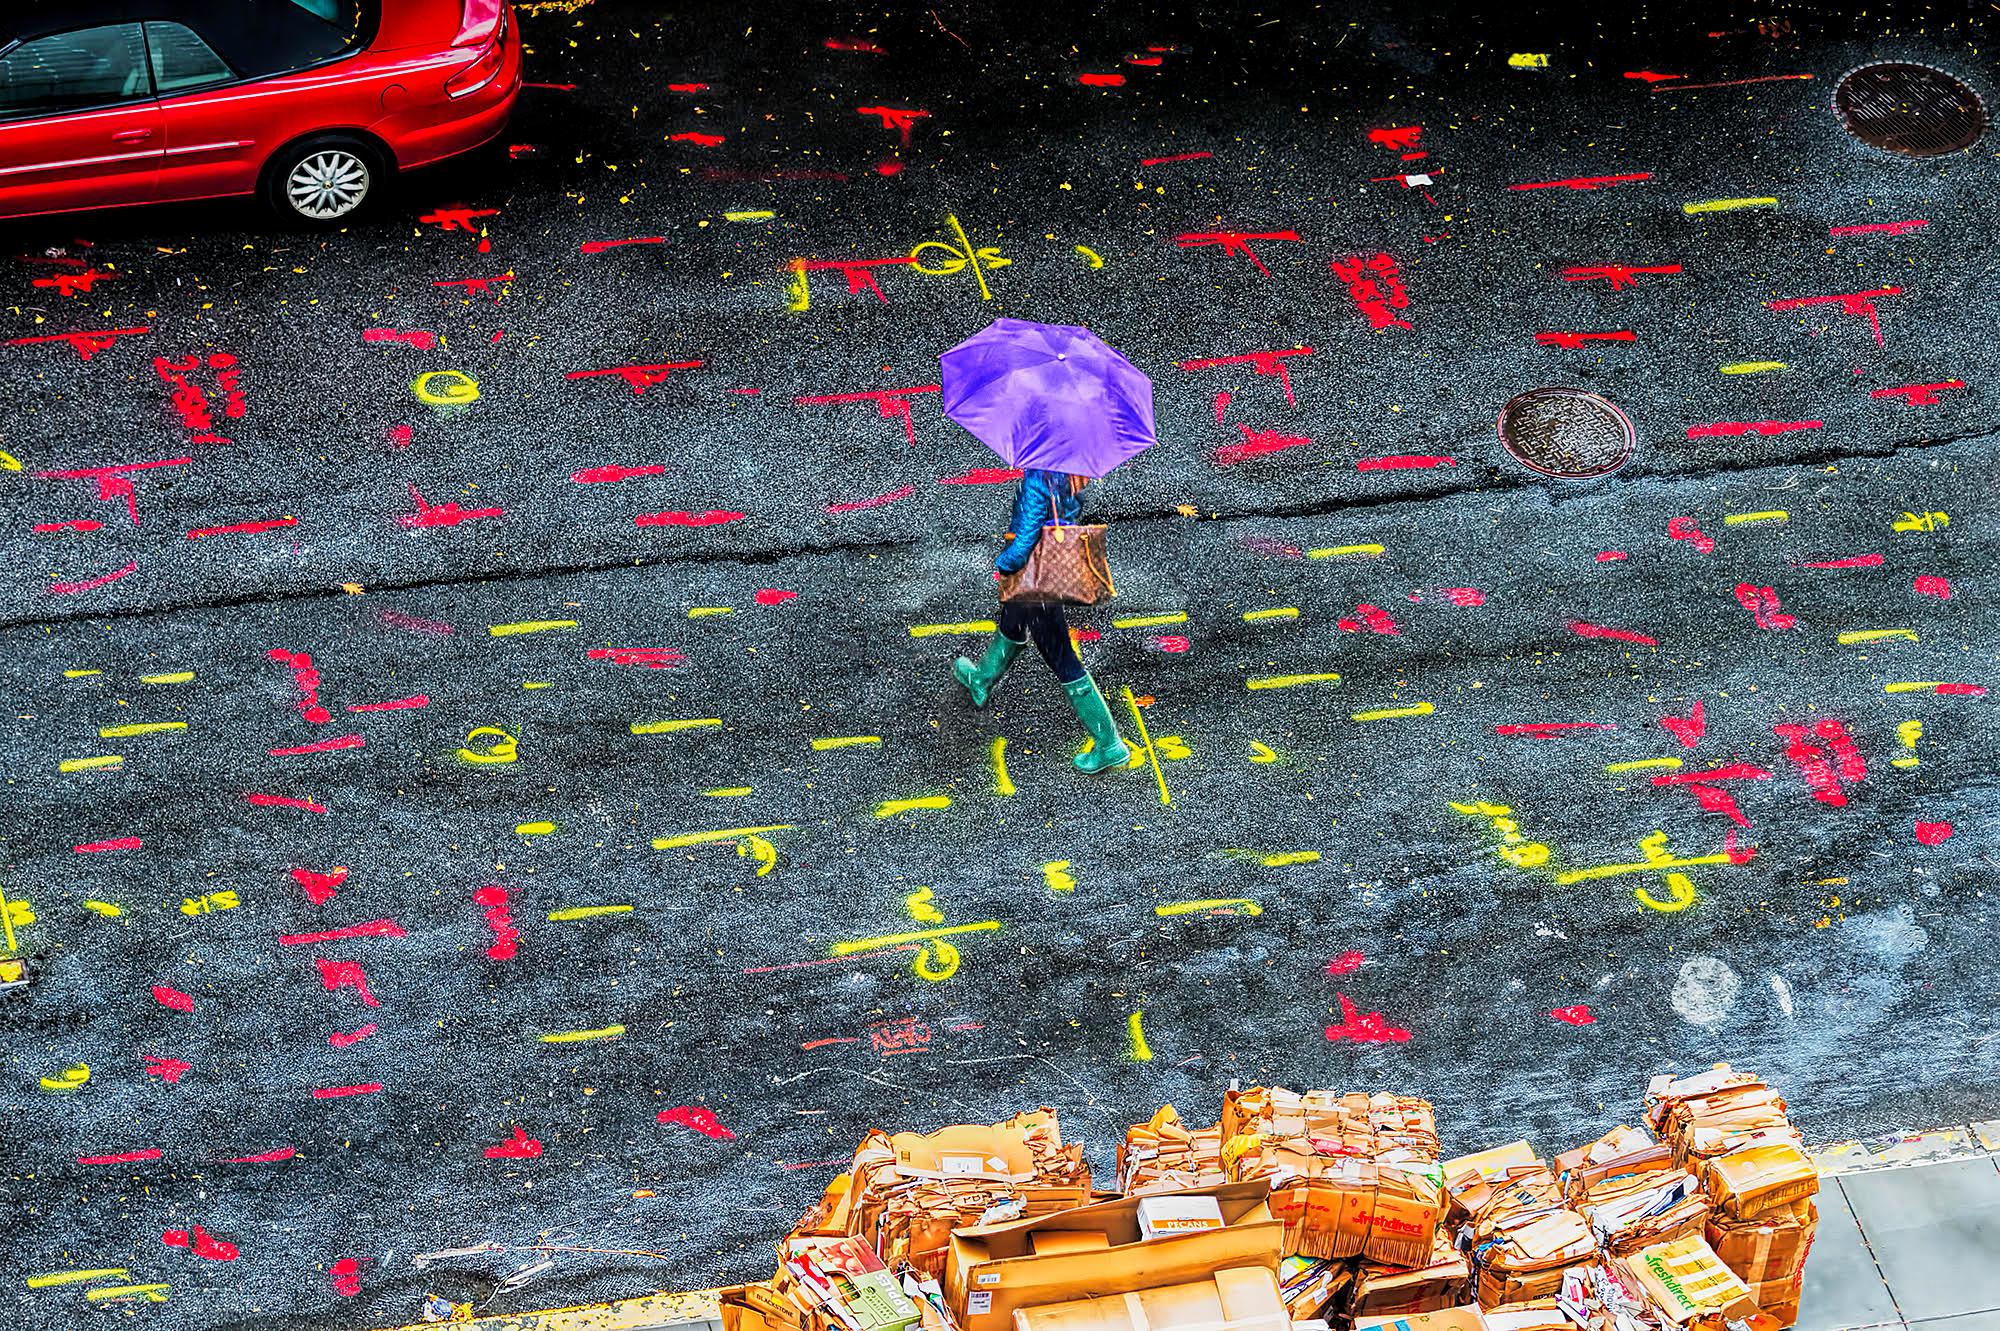 Mitchell Funk Landscape Photograph - Street Art: Literally.  New York City Rainy Day with Purple Umbrella